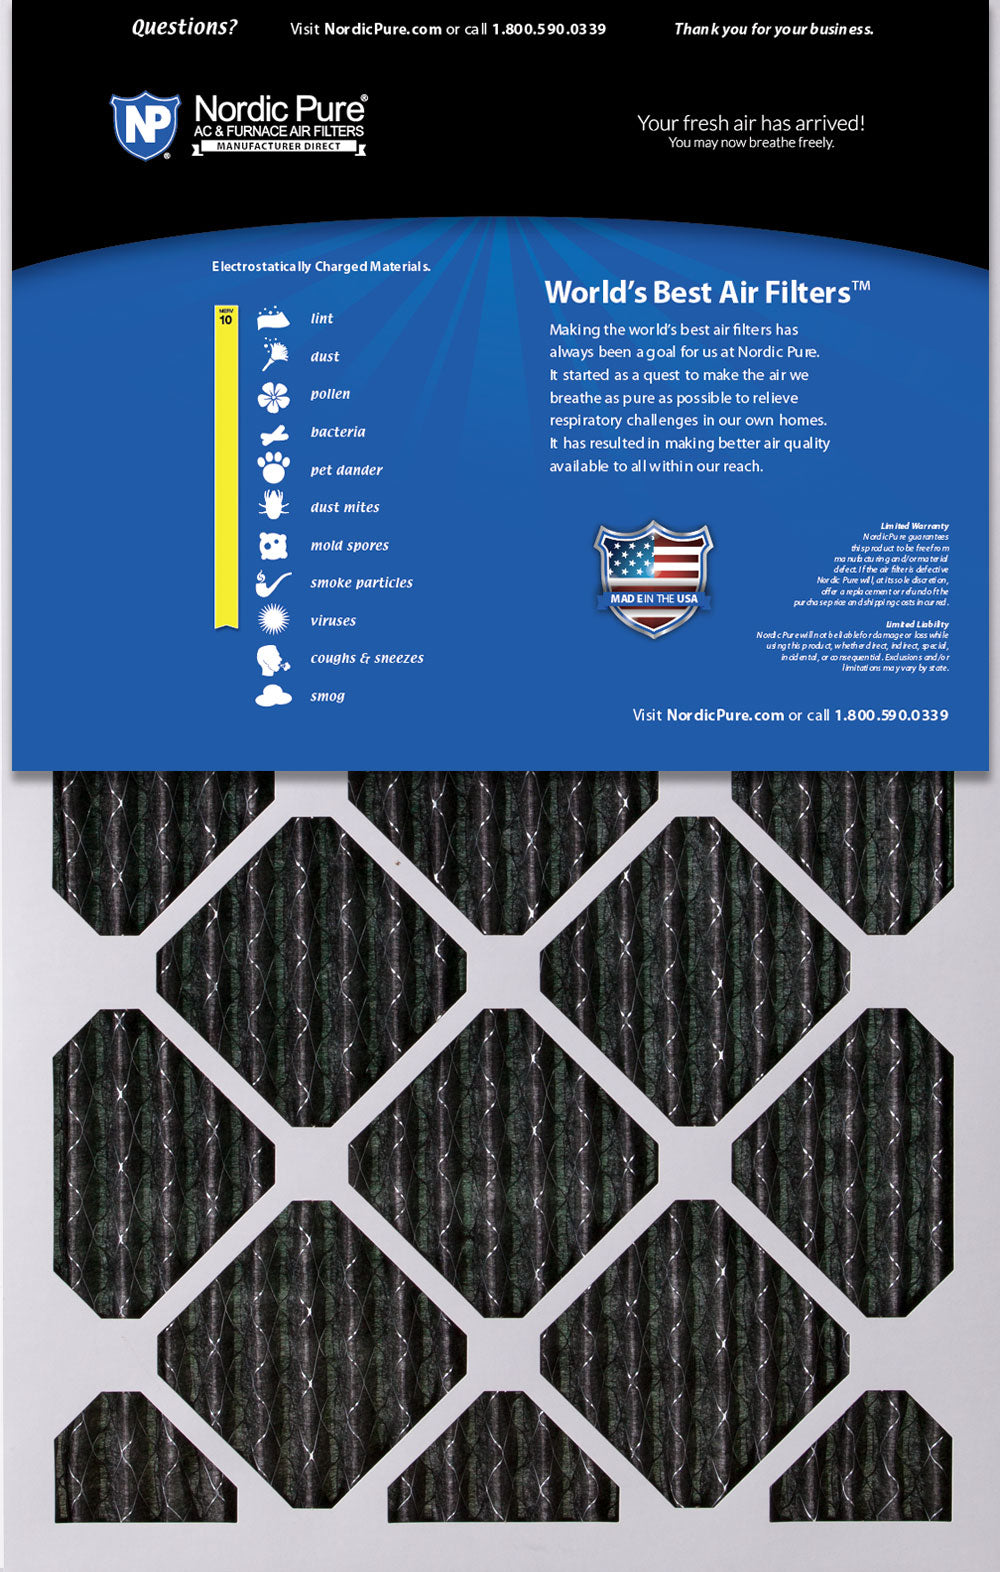 19x22x1 Exact MERV 10 Plus Carbon AC Furnace Filters